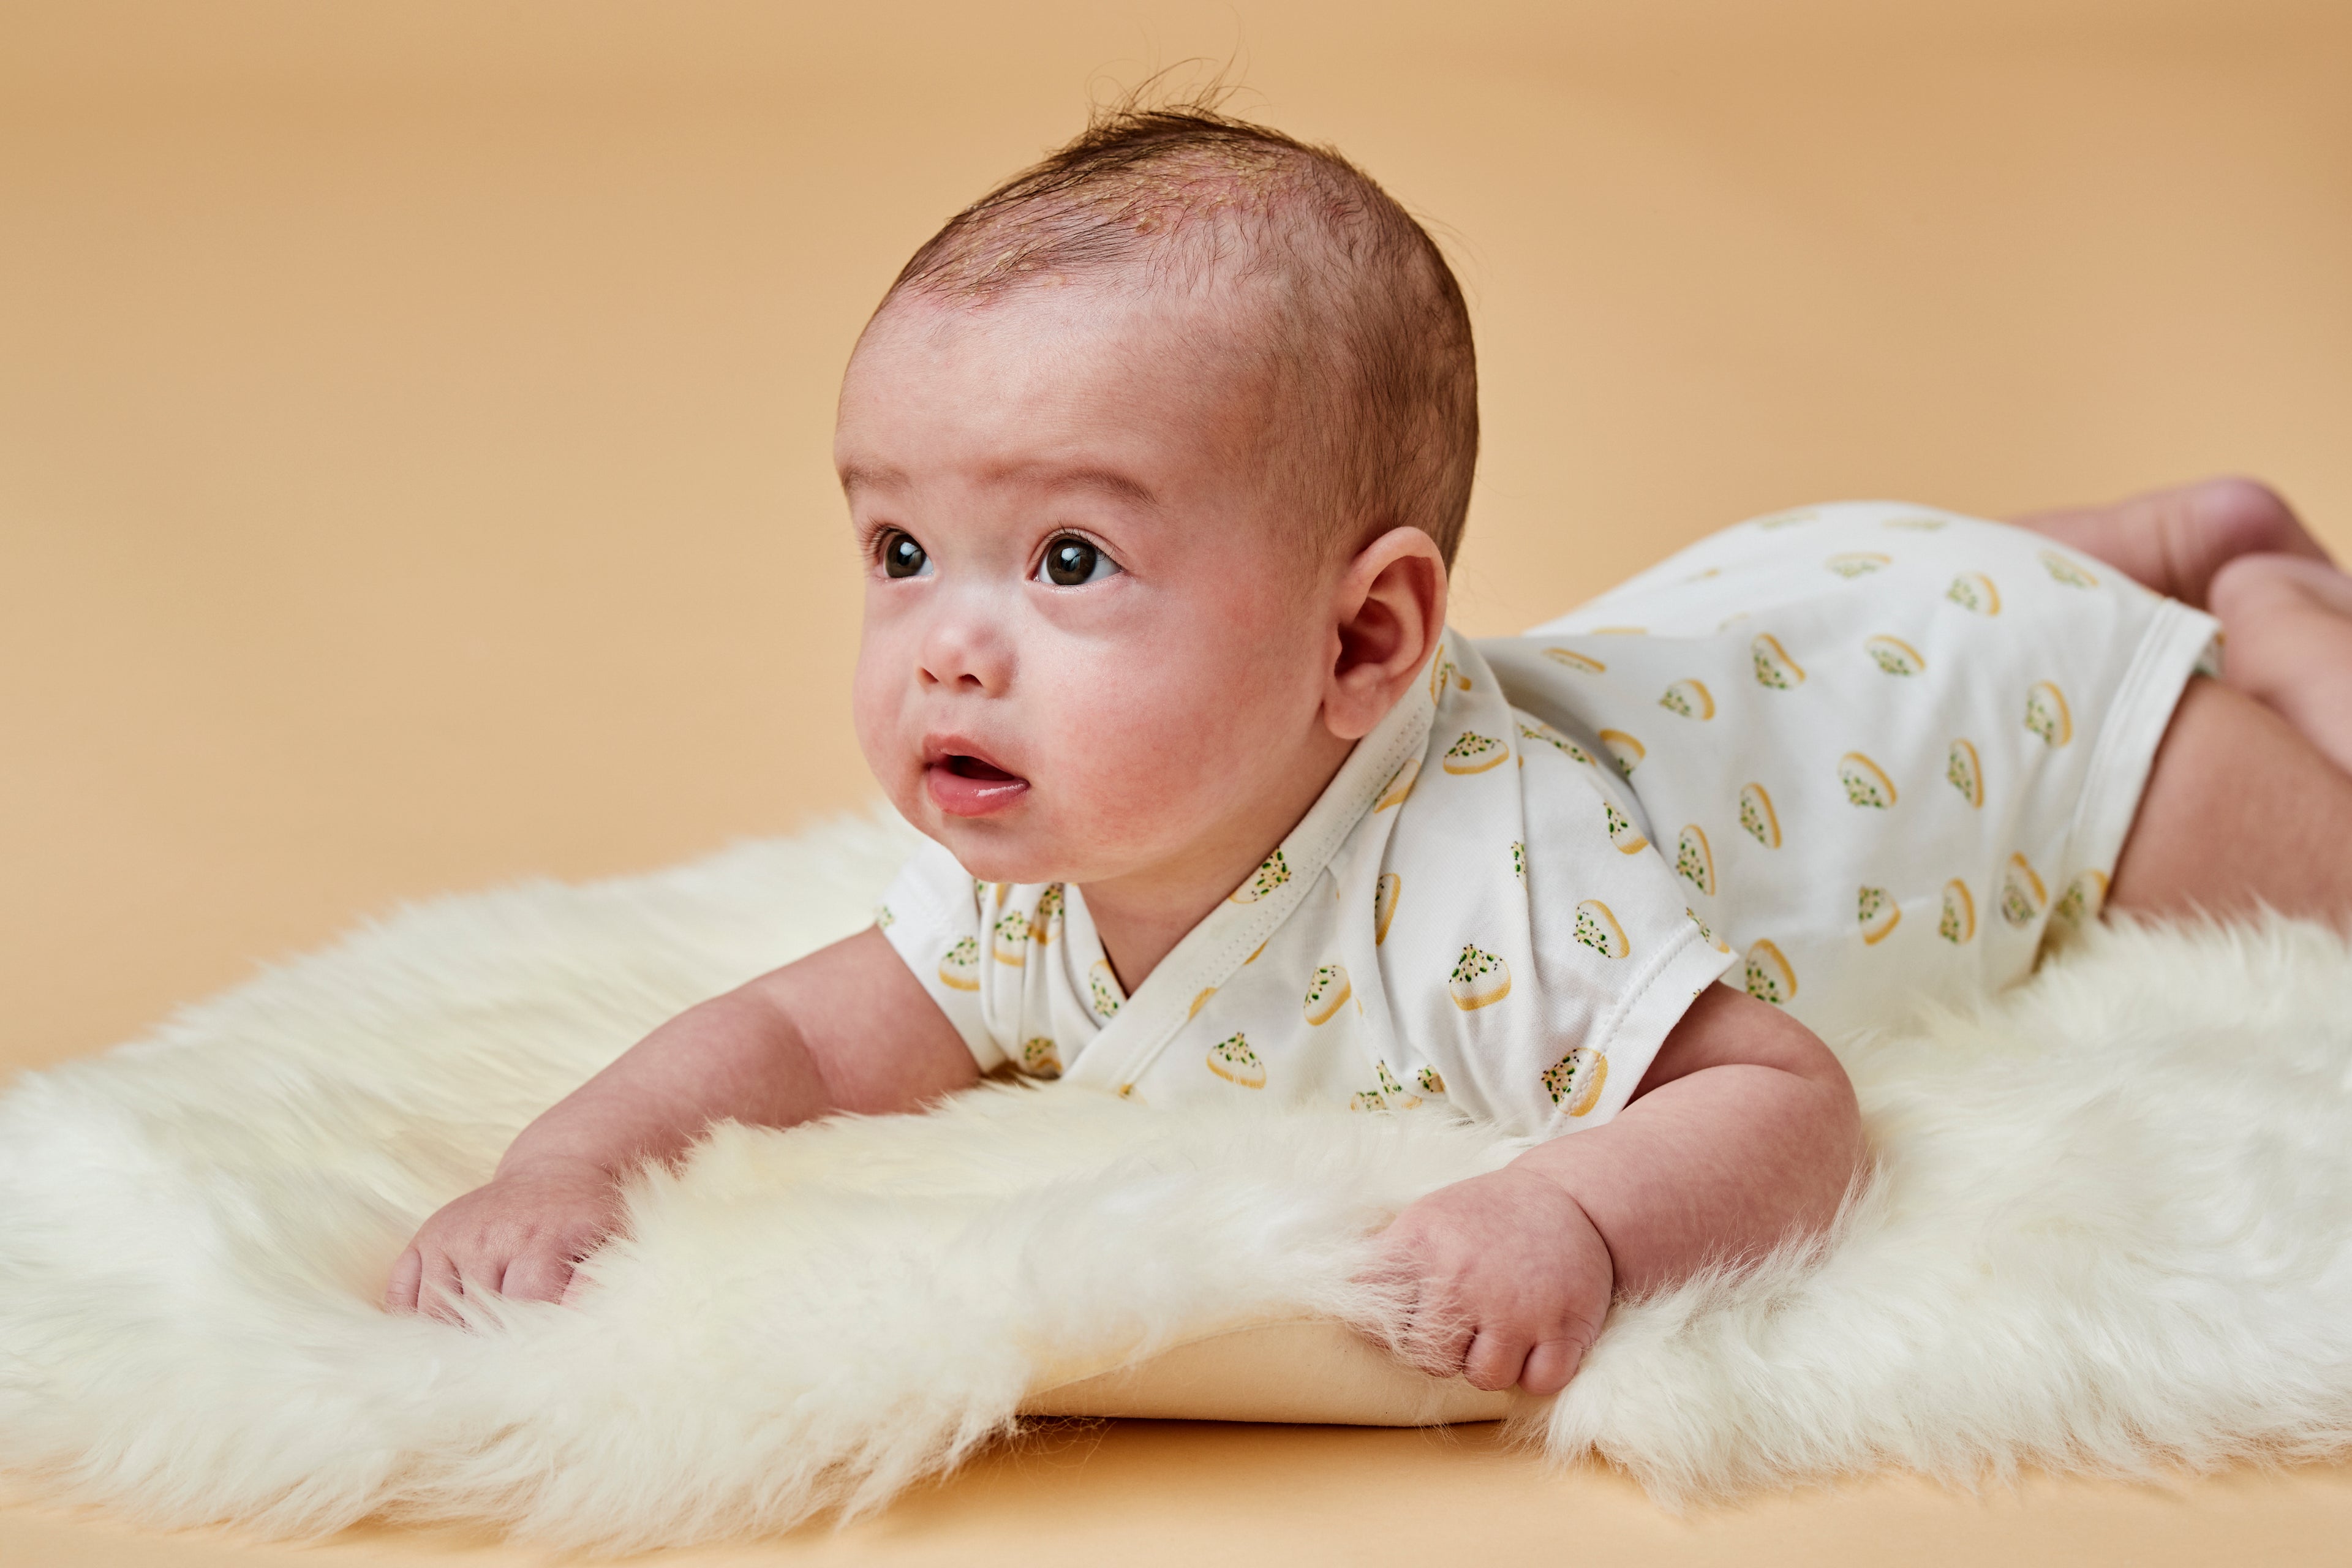 Baby with dumpling bodysuit on sheepskin rug